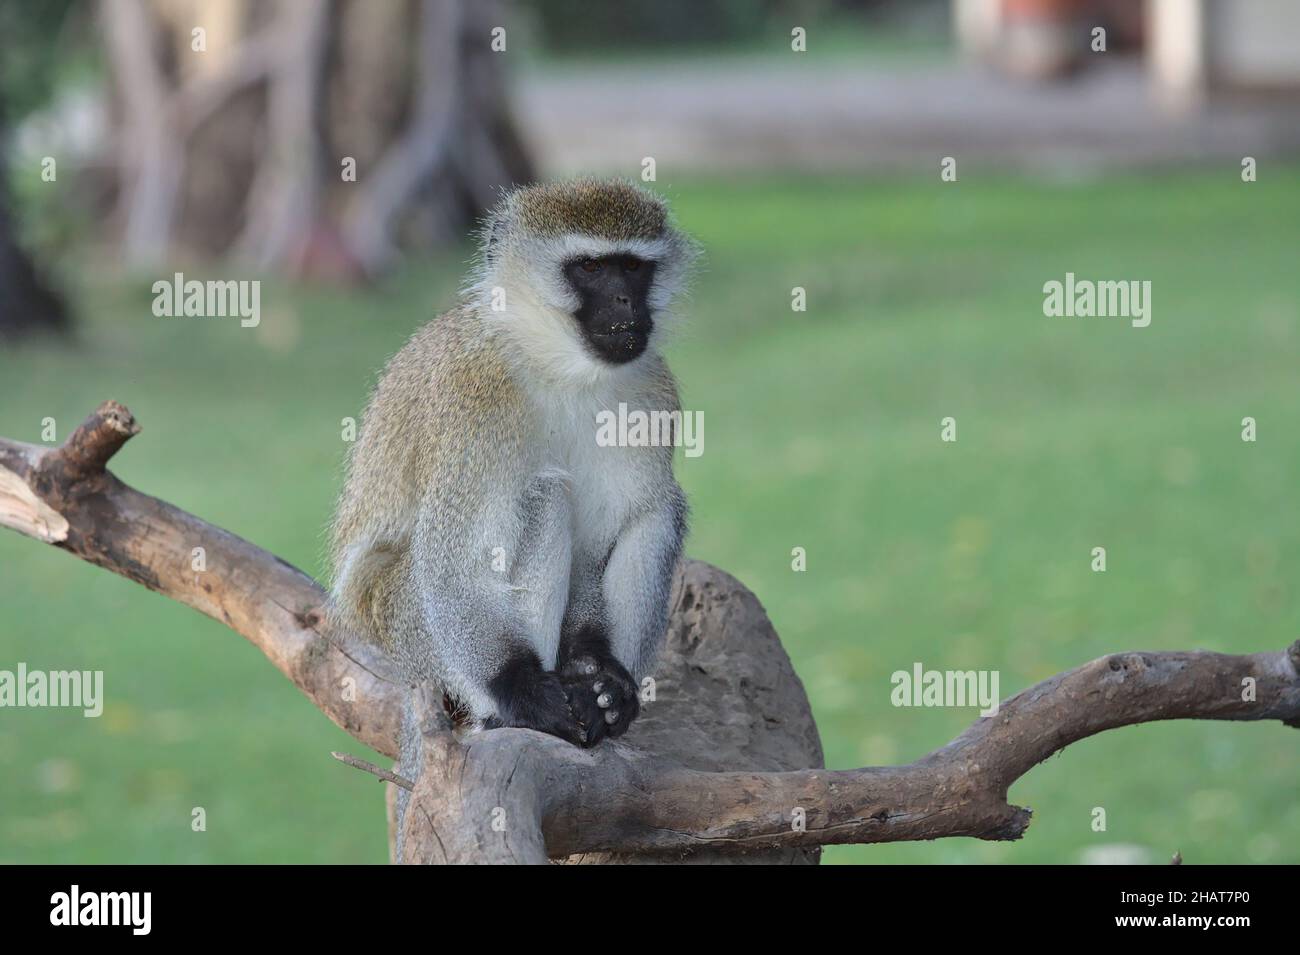 cute vervet monkey sitting alert on tree branch and looking curious in Naivasha, Kenya Stock Photo